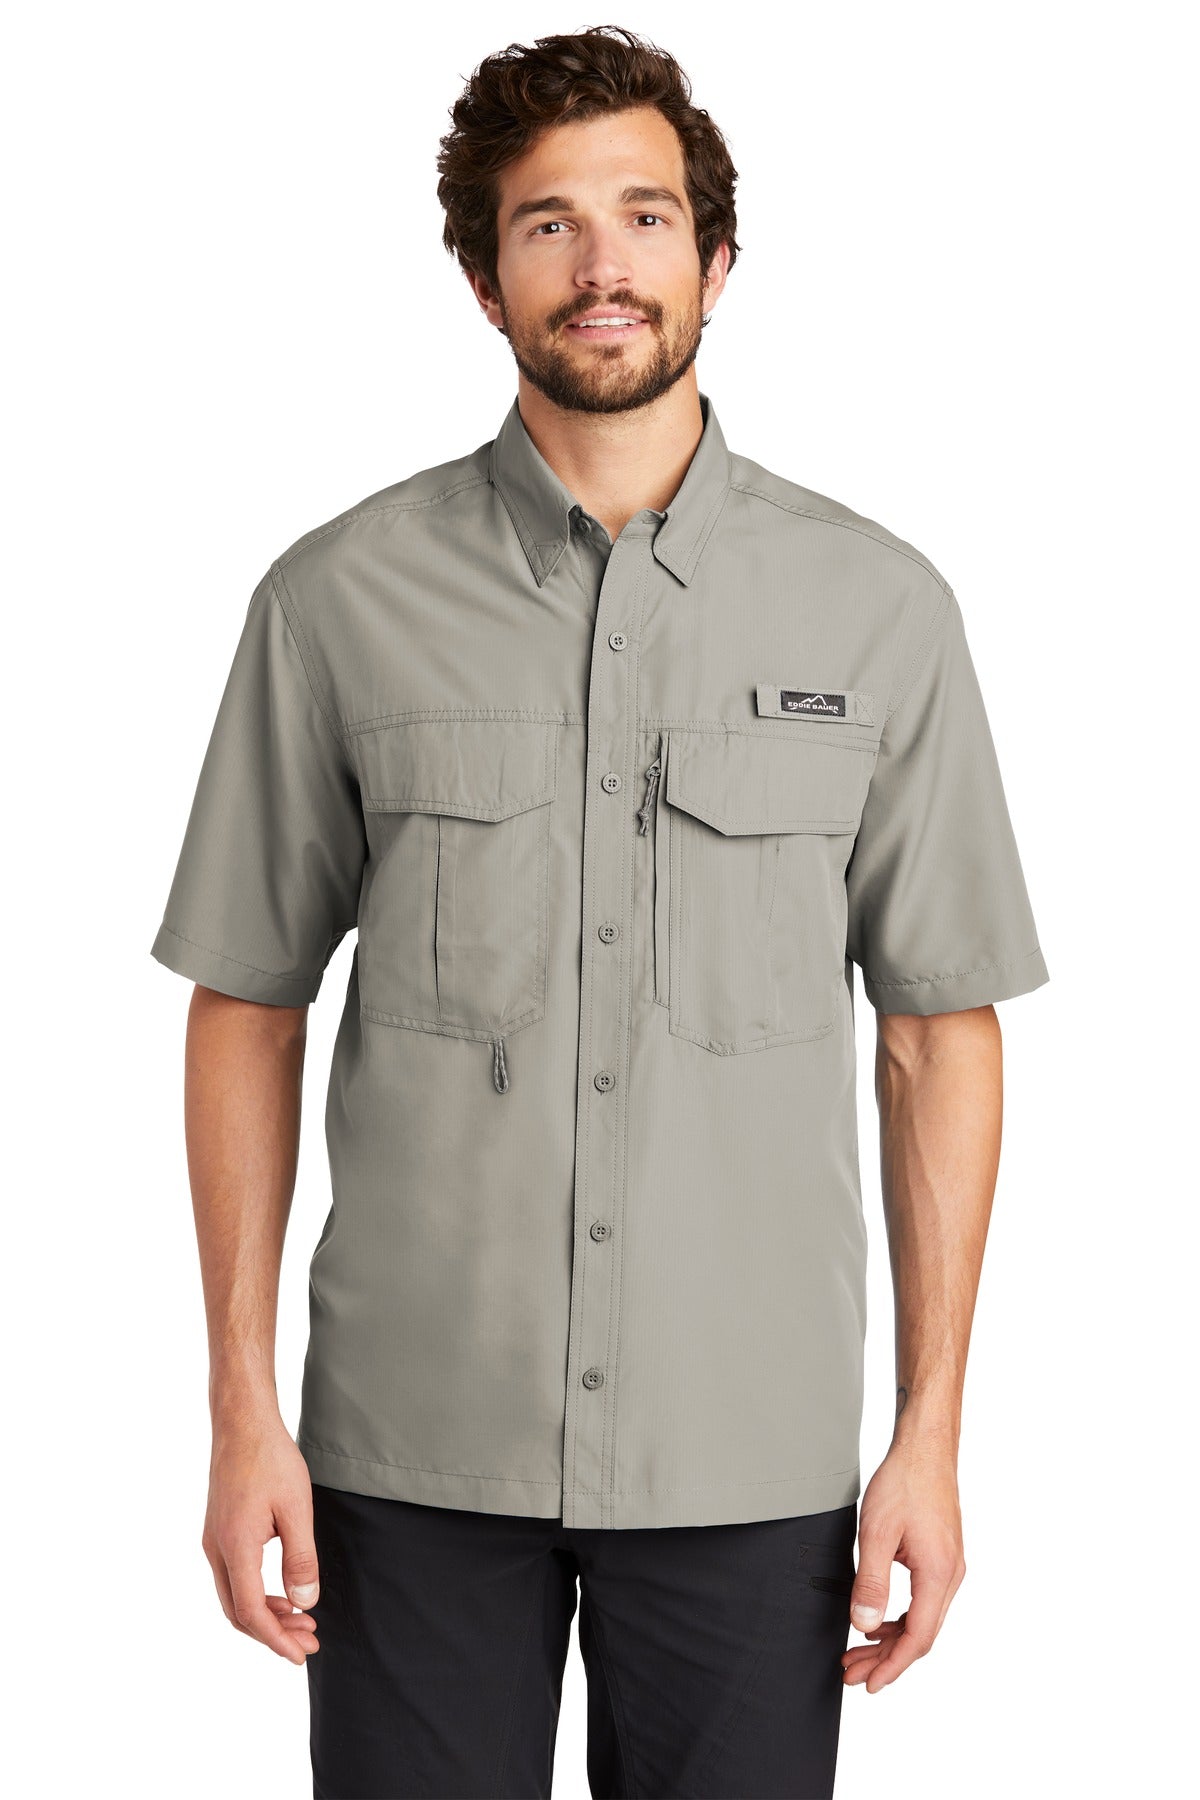 Eddie Bauer® - Short Sleeve Performance Fishing Shirt. EB602